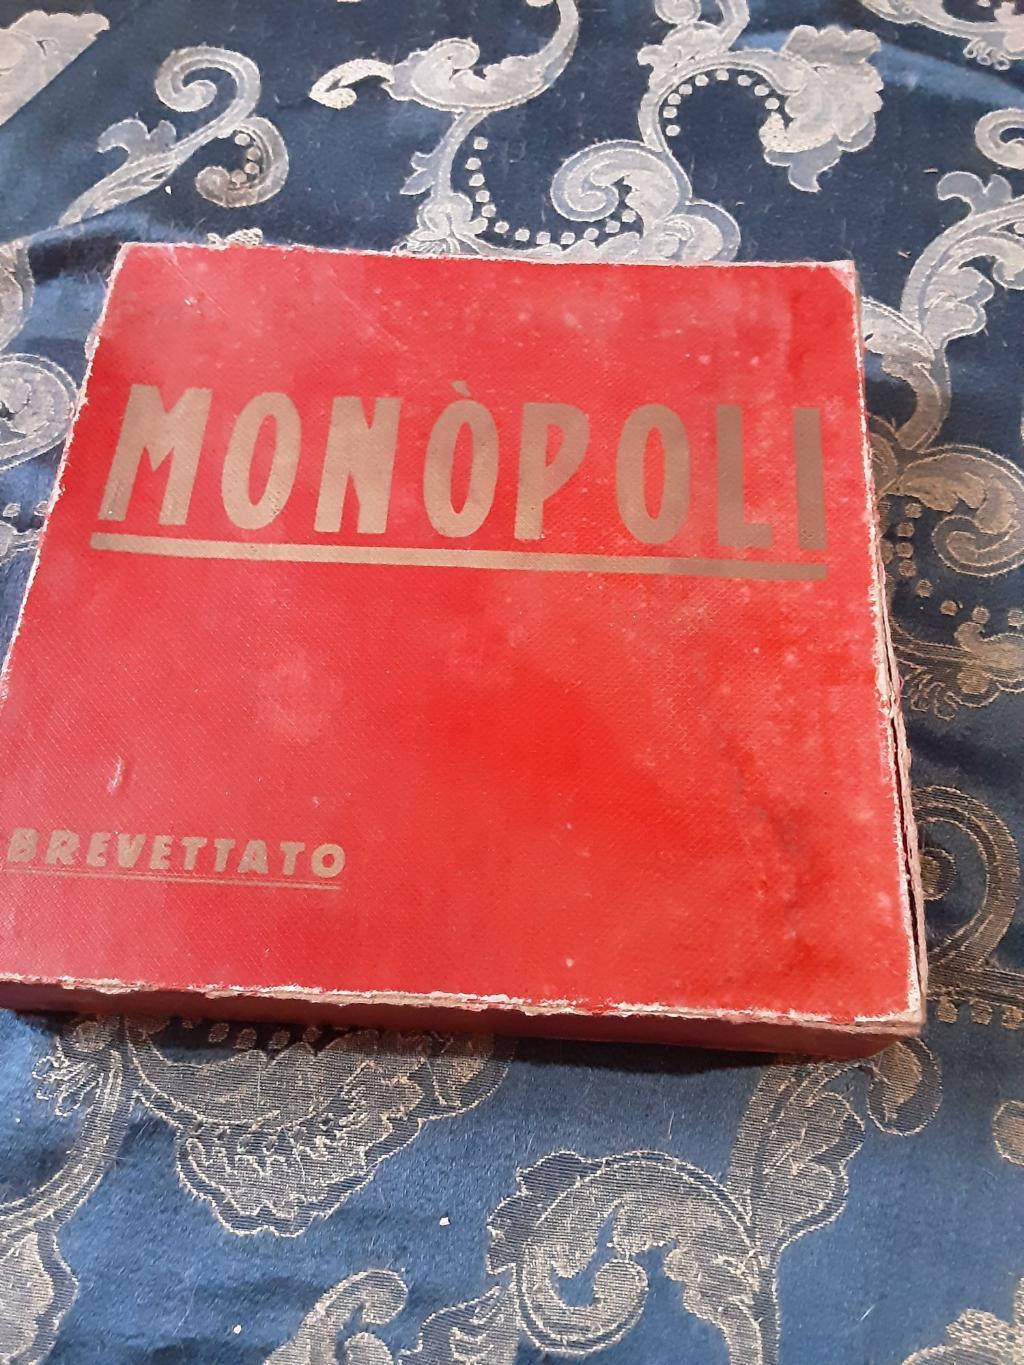 Monopoli Rare édition 1942